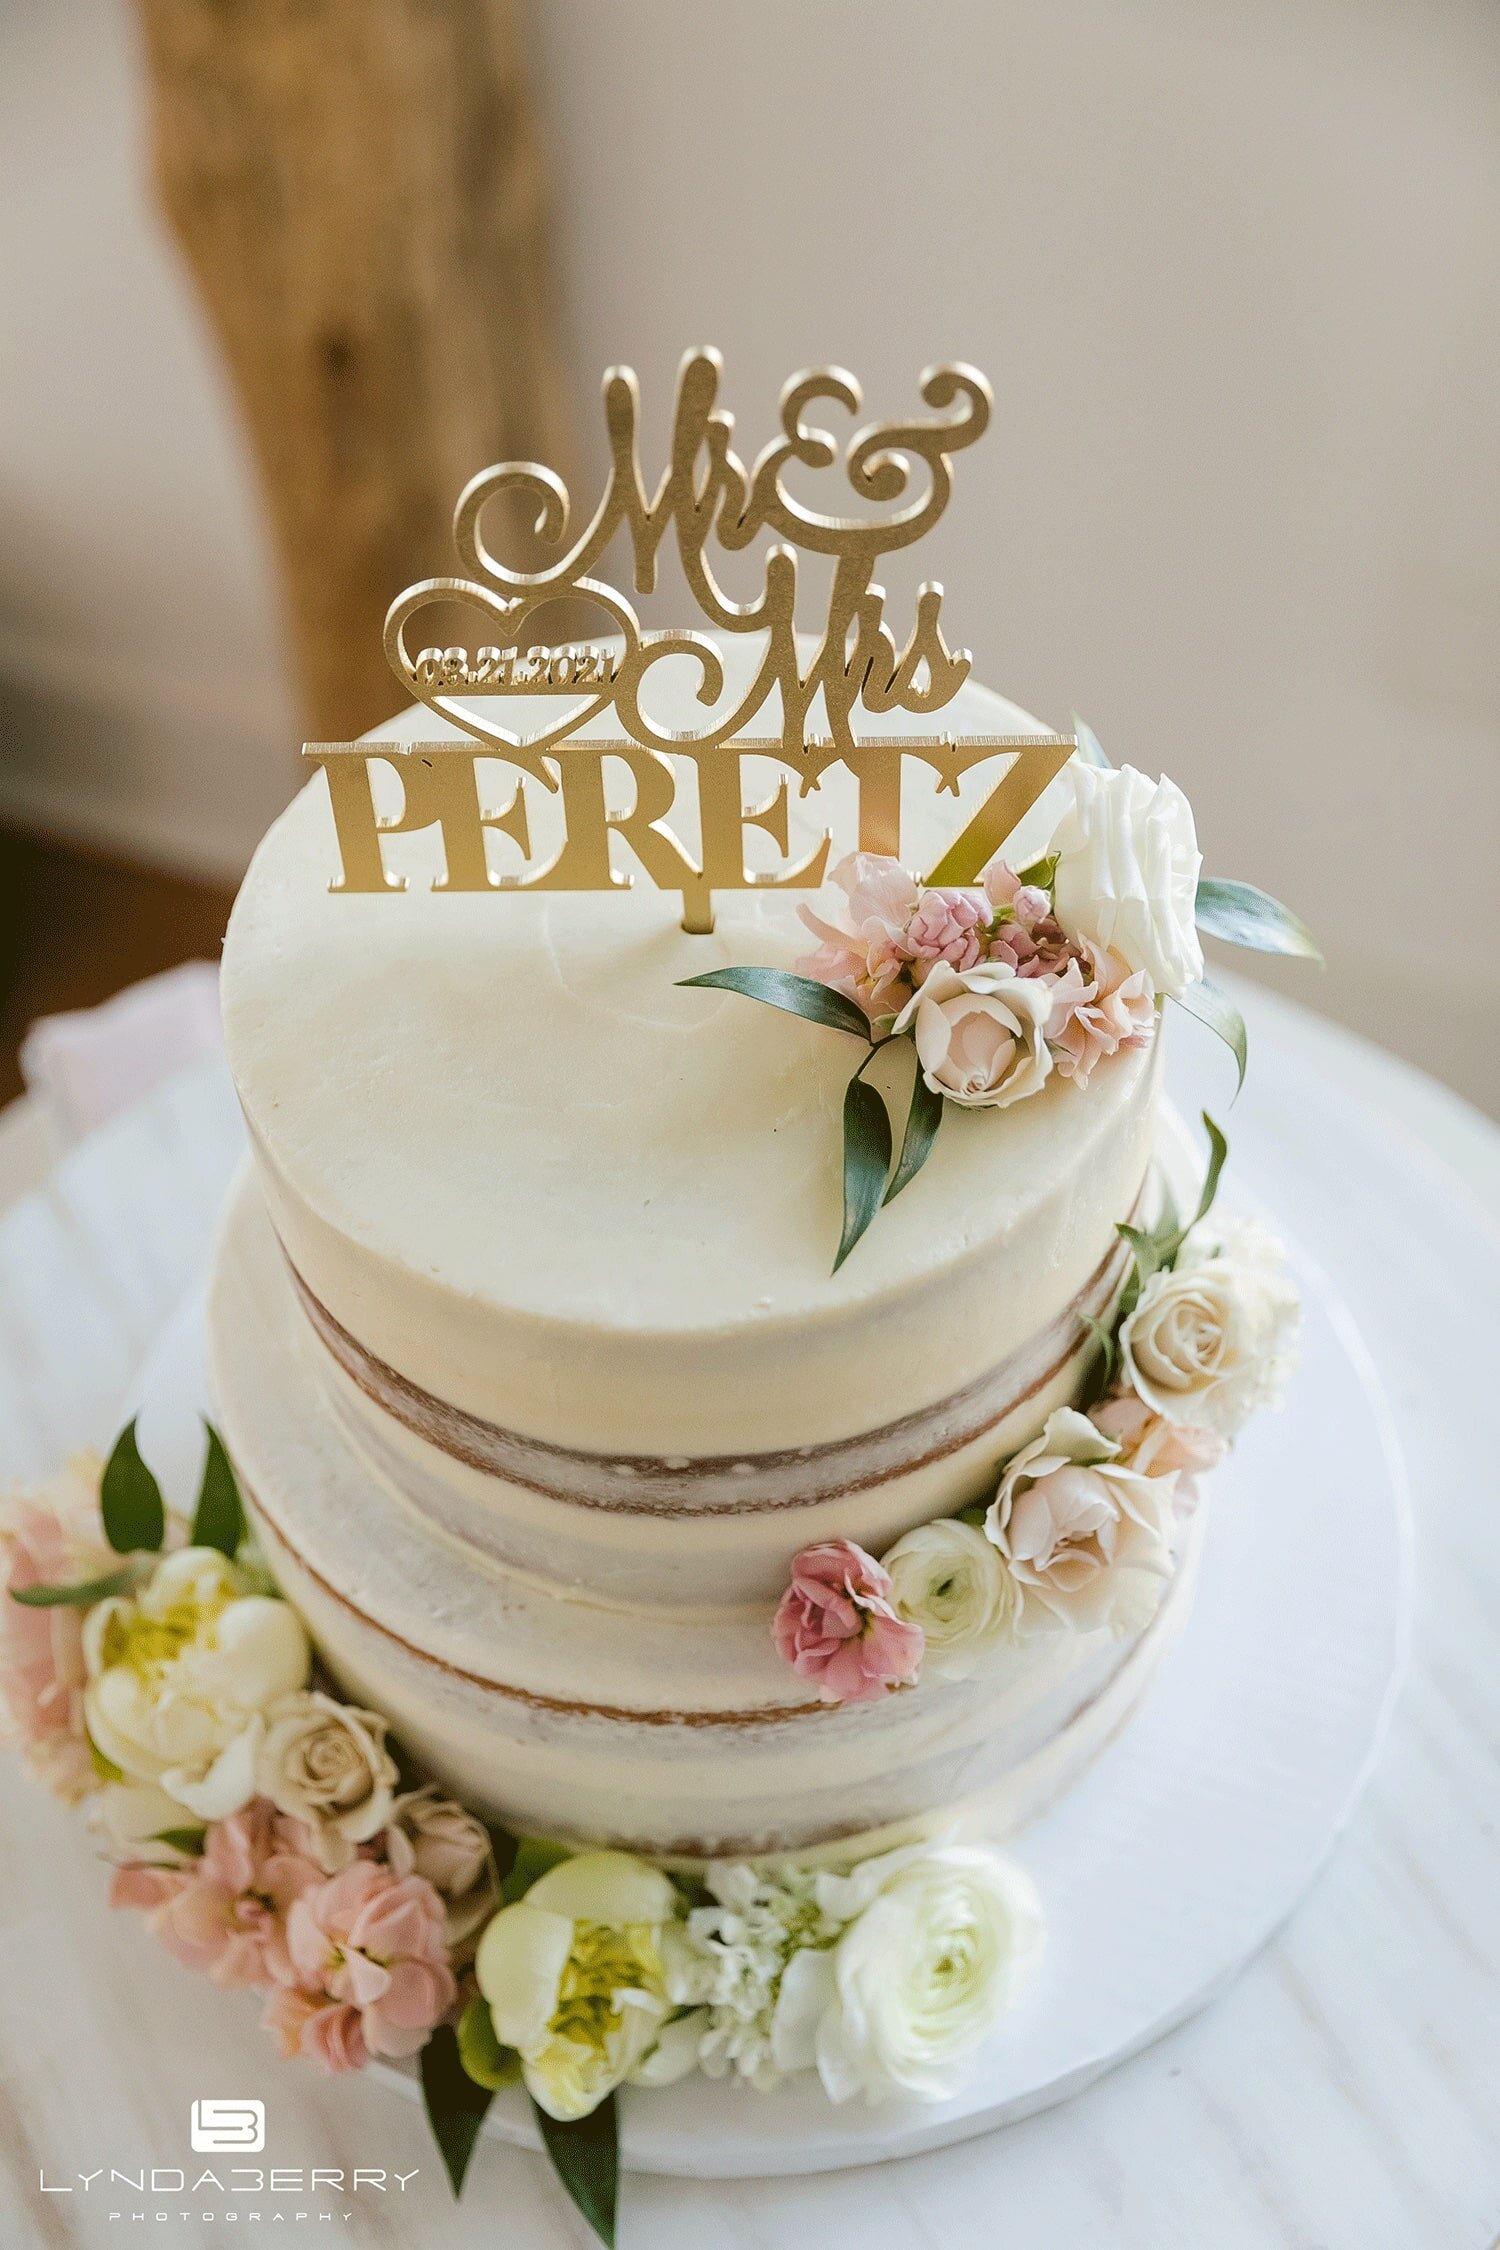 Wedding cake and fresh flowers